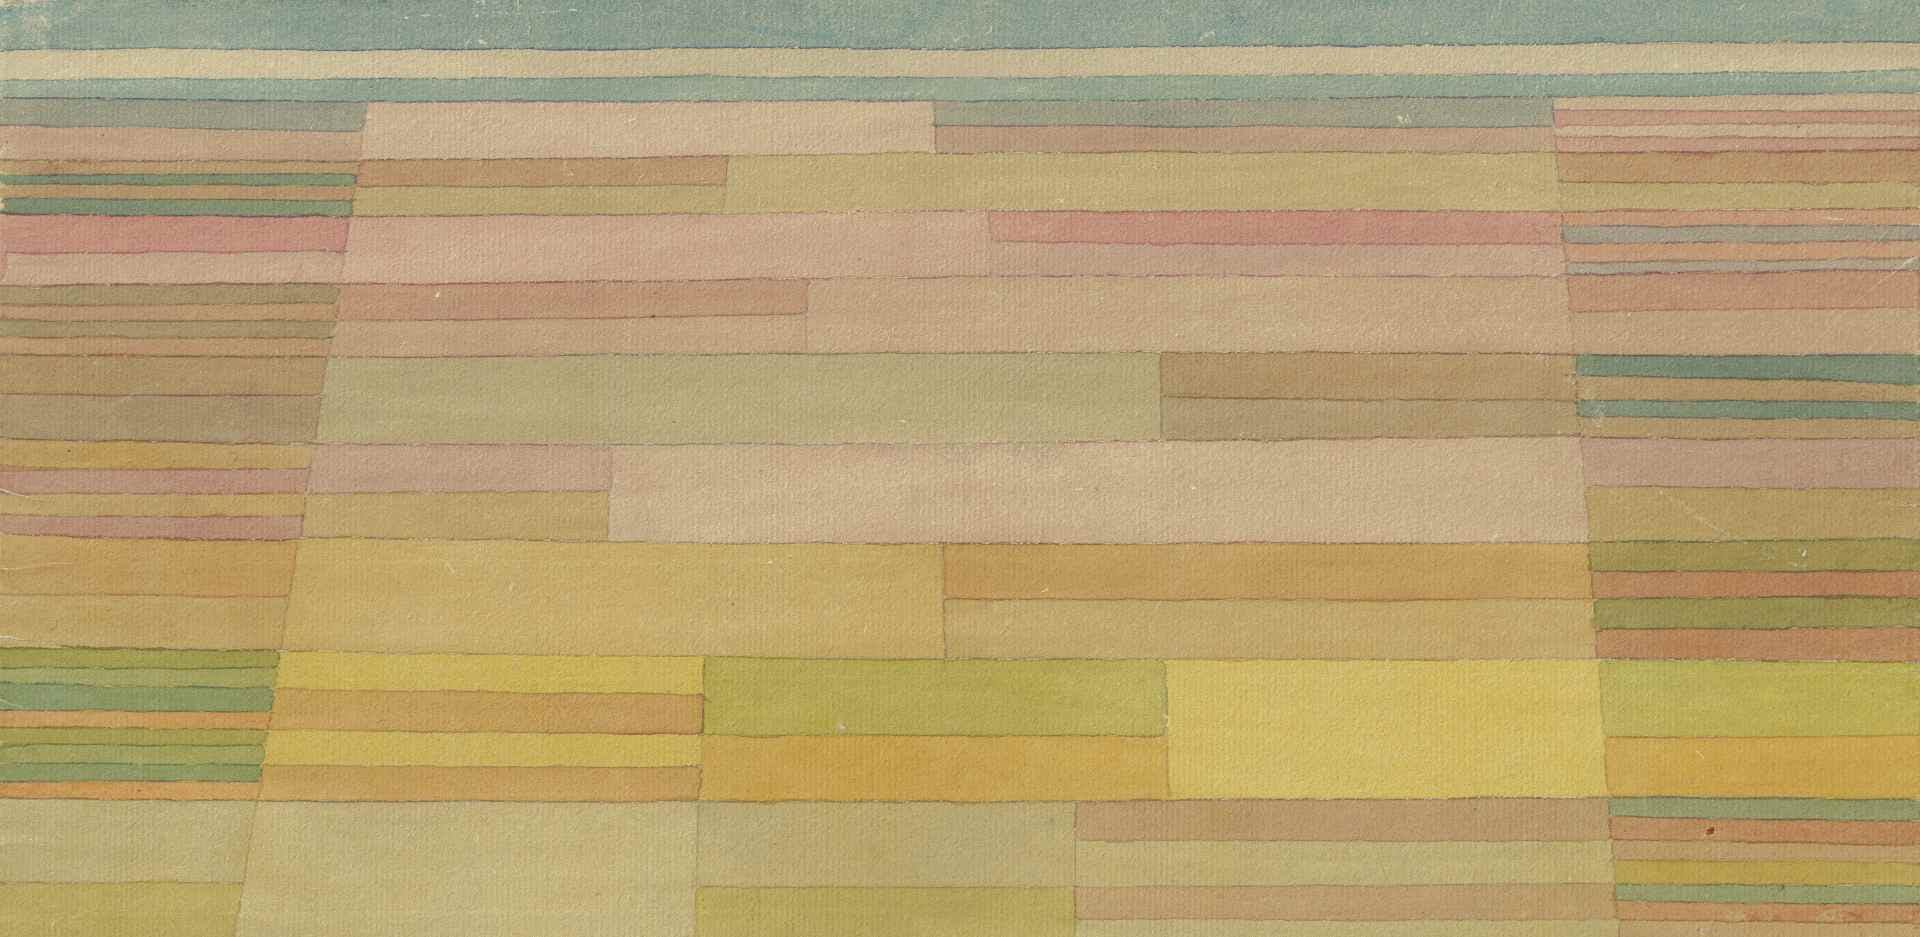 A painting by Paul Klee, titled "Vermessene Felder (Surveyed Fields)," dated 1929.